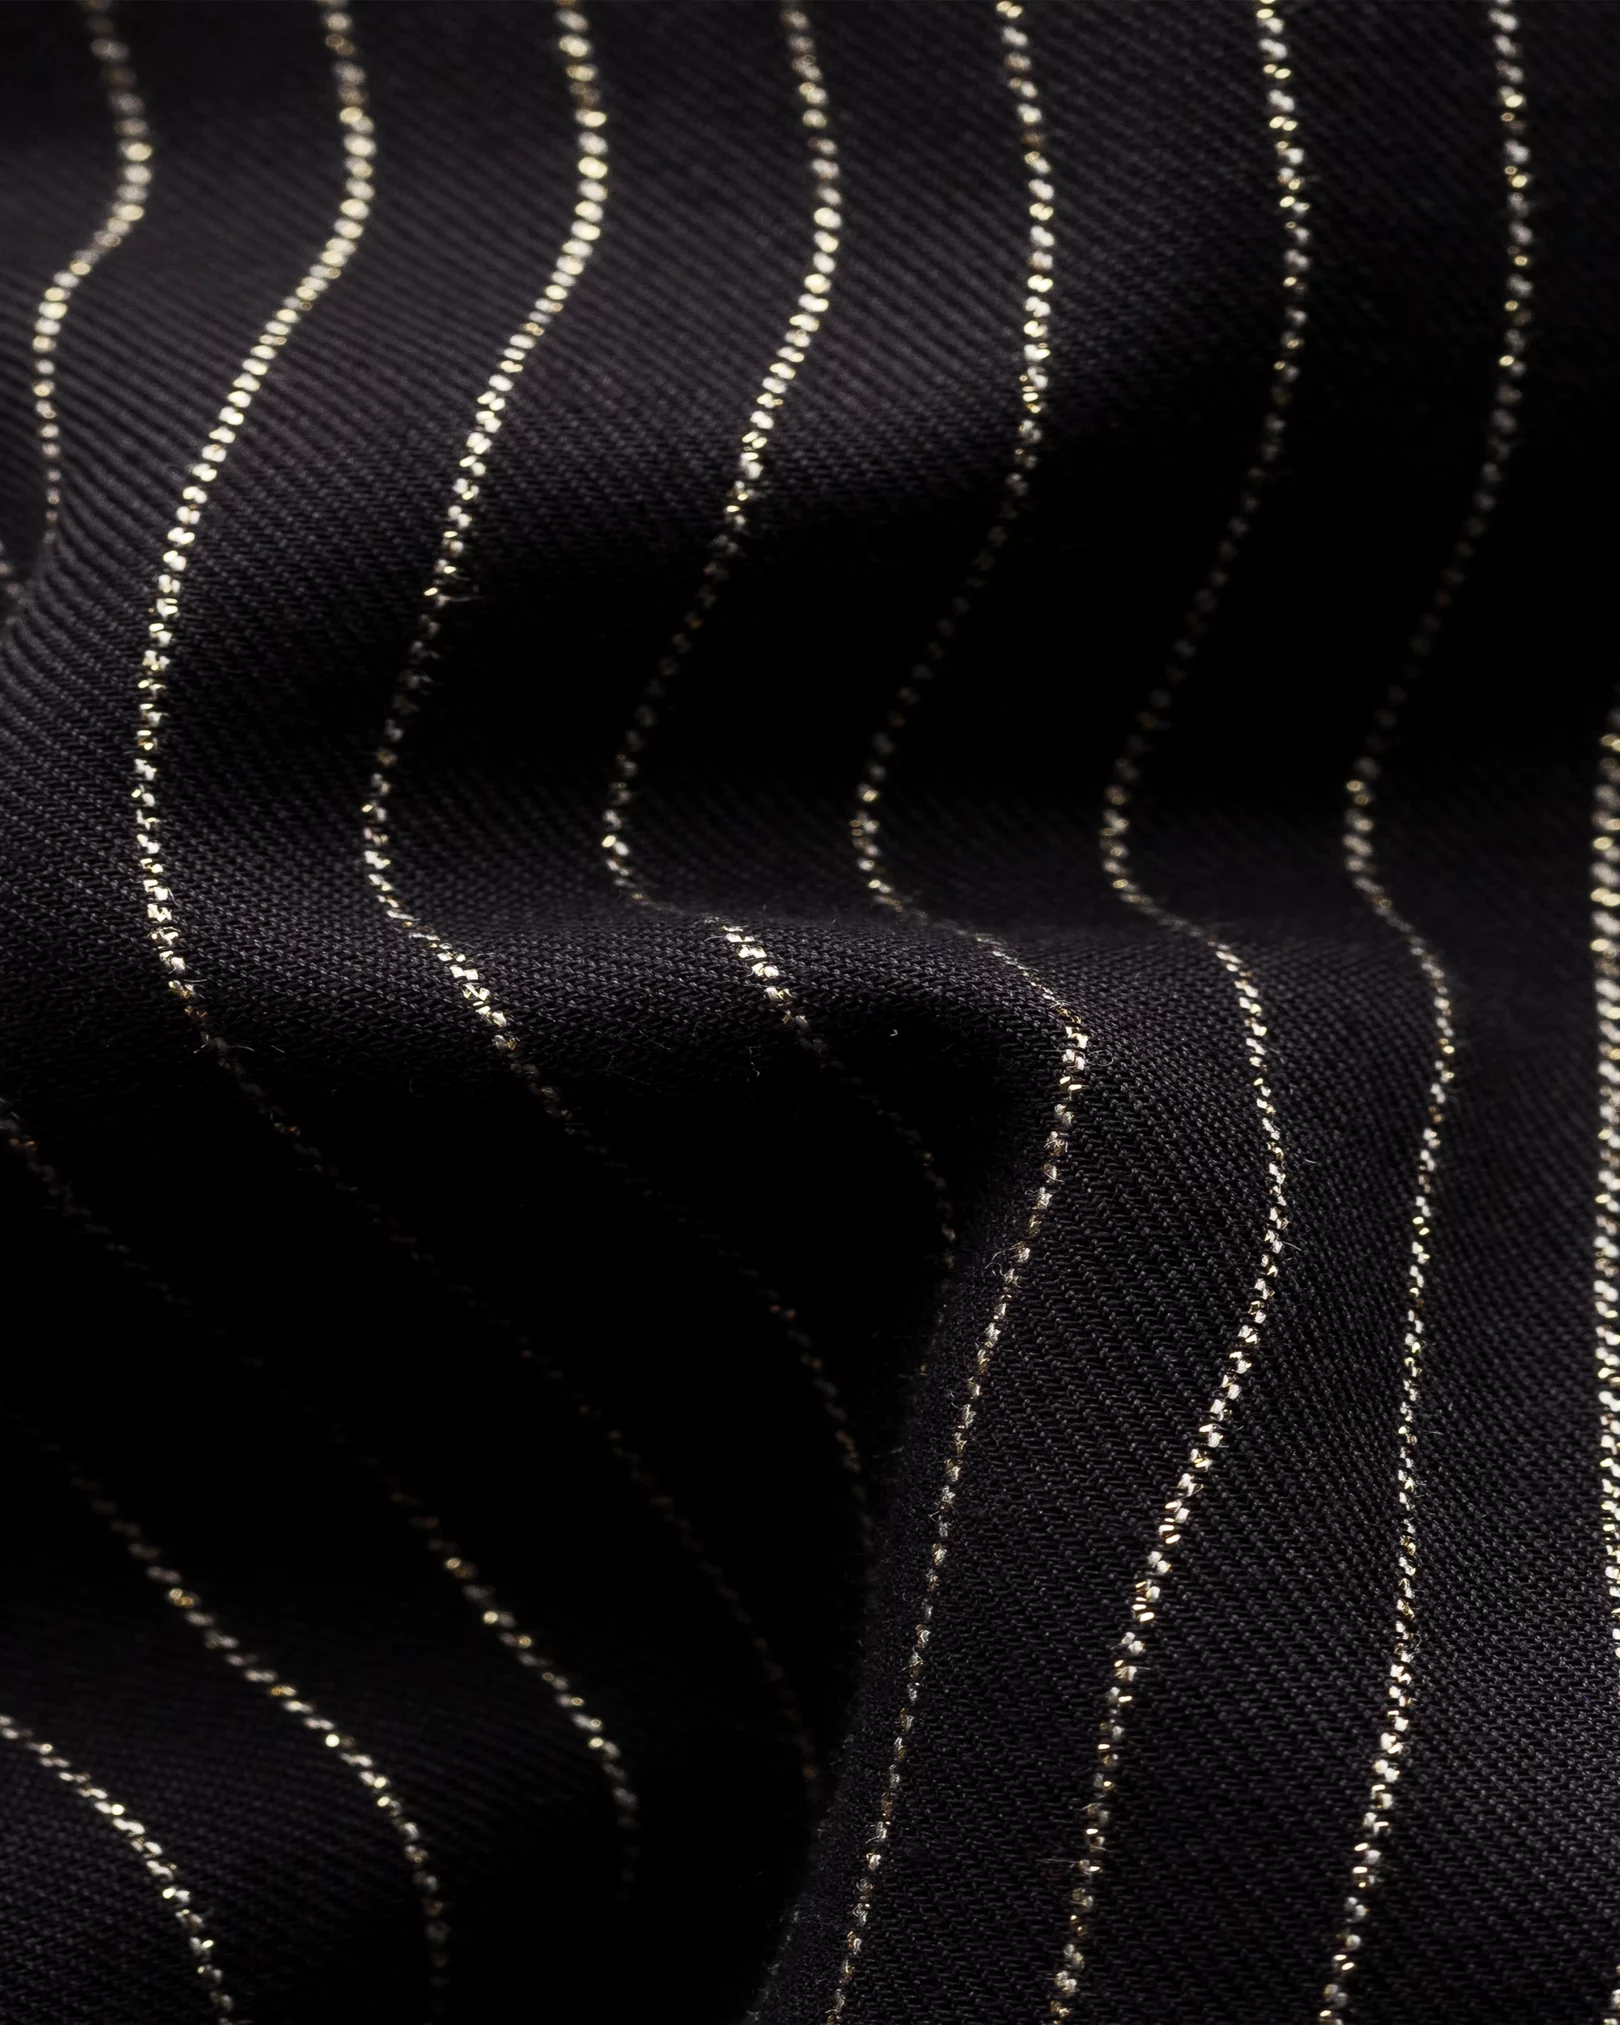 Eton - black tuxedo shirt glitter pinstripe